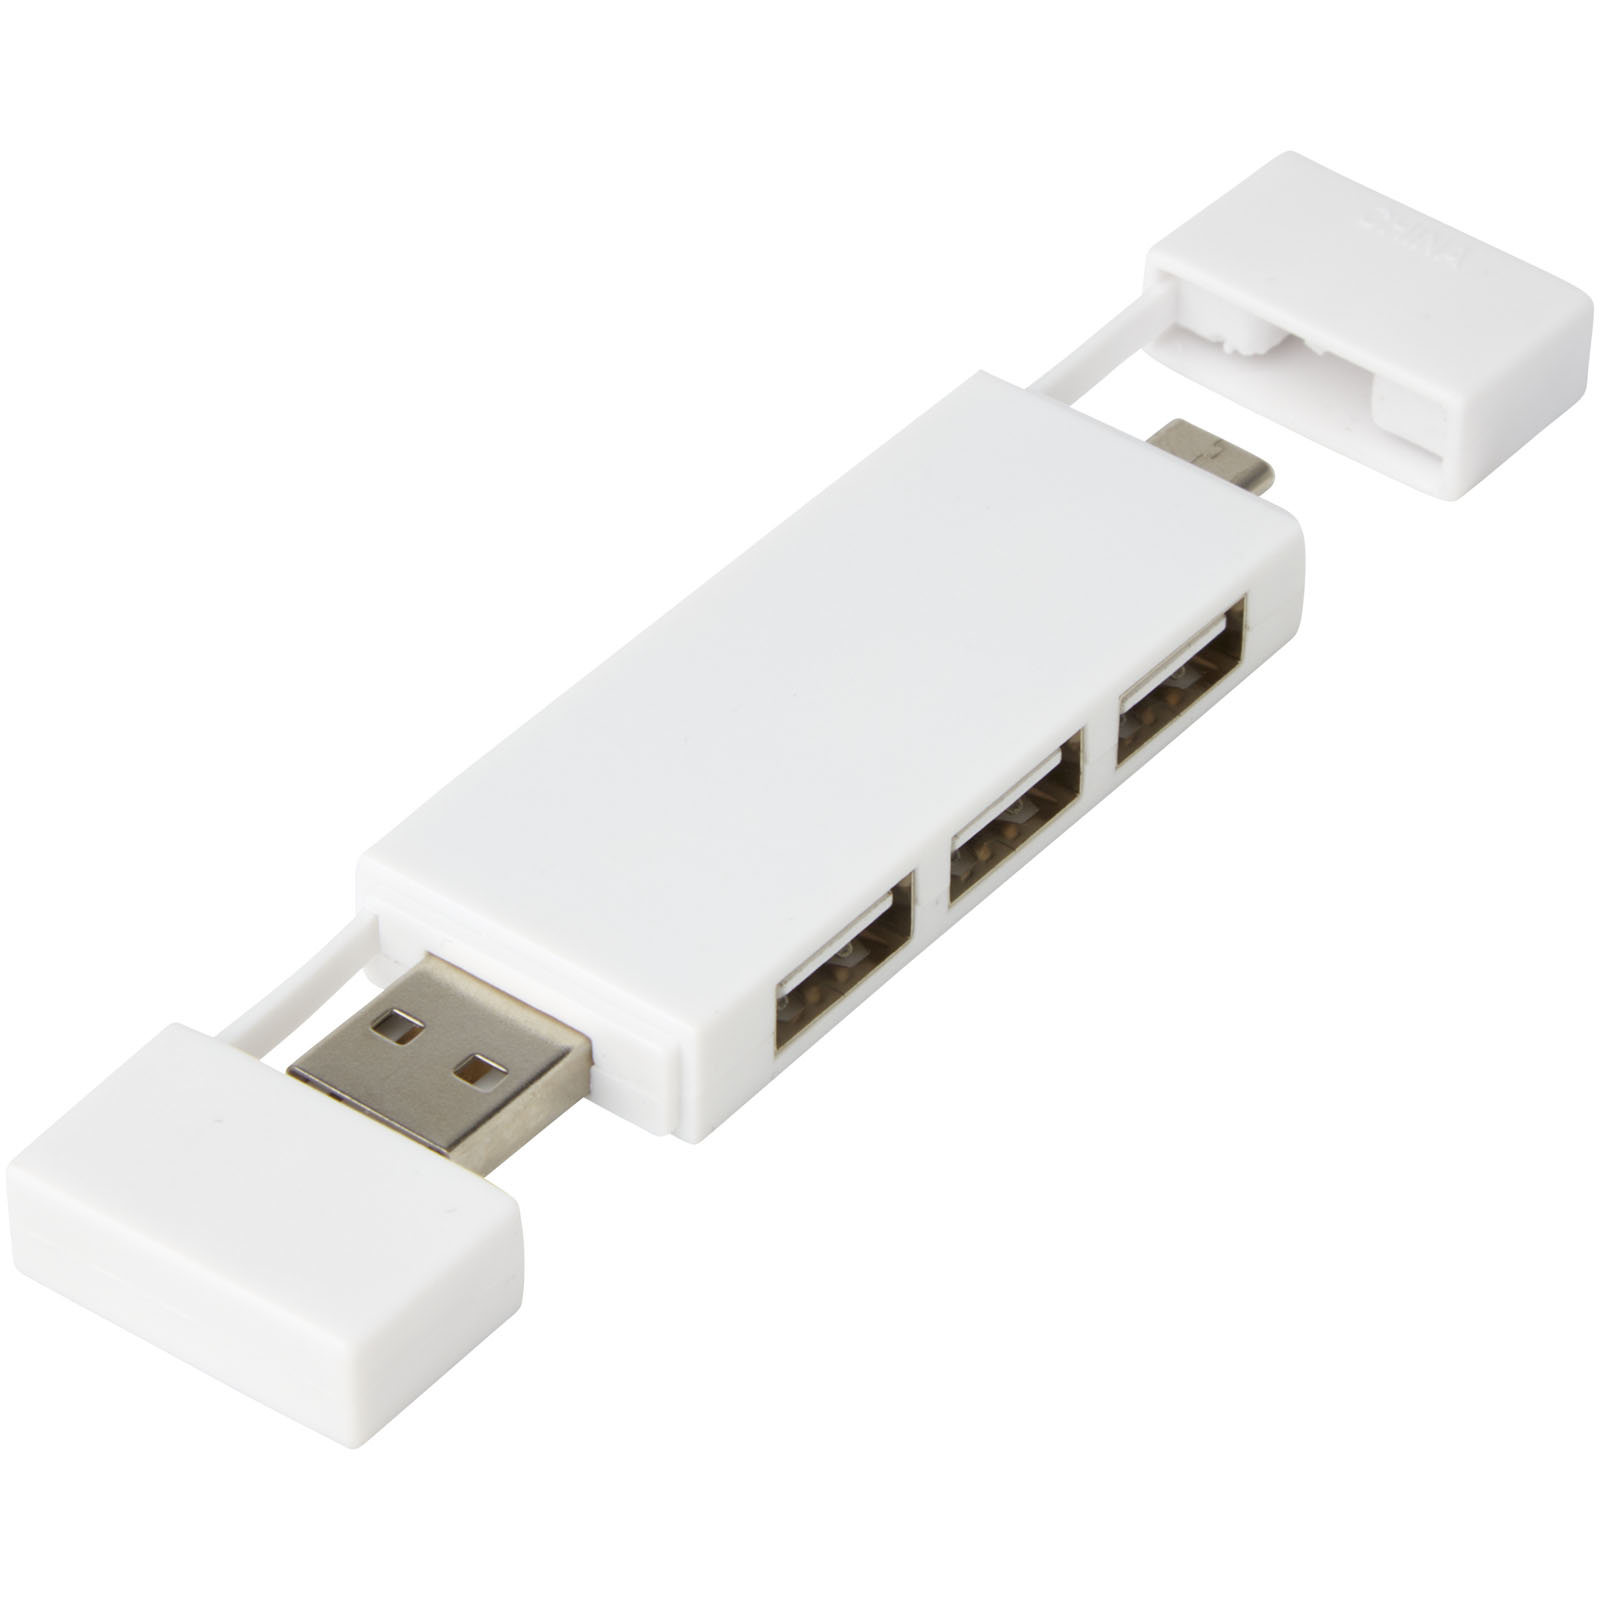 USB Hubs - Mulan dual USB 2.0 hub